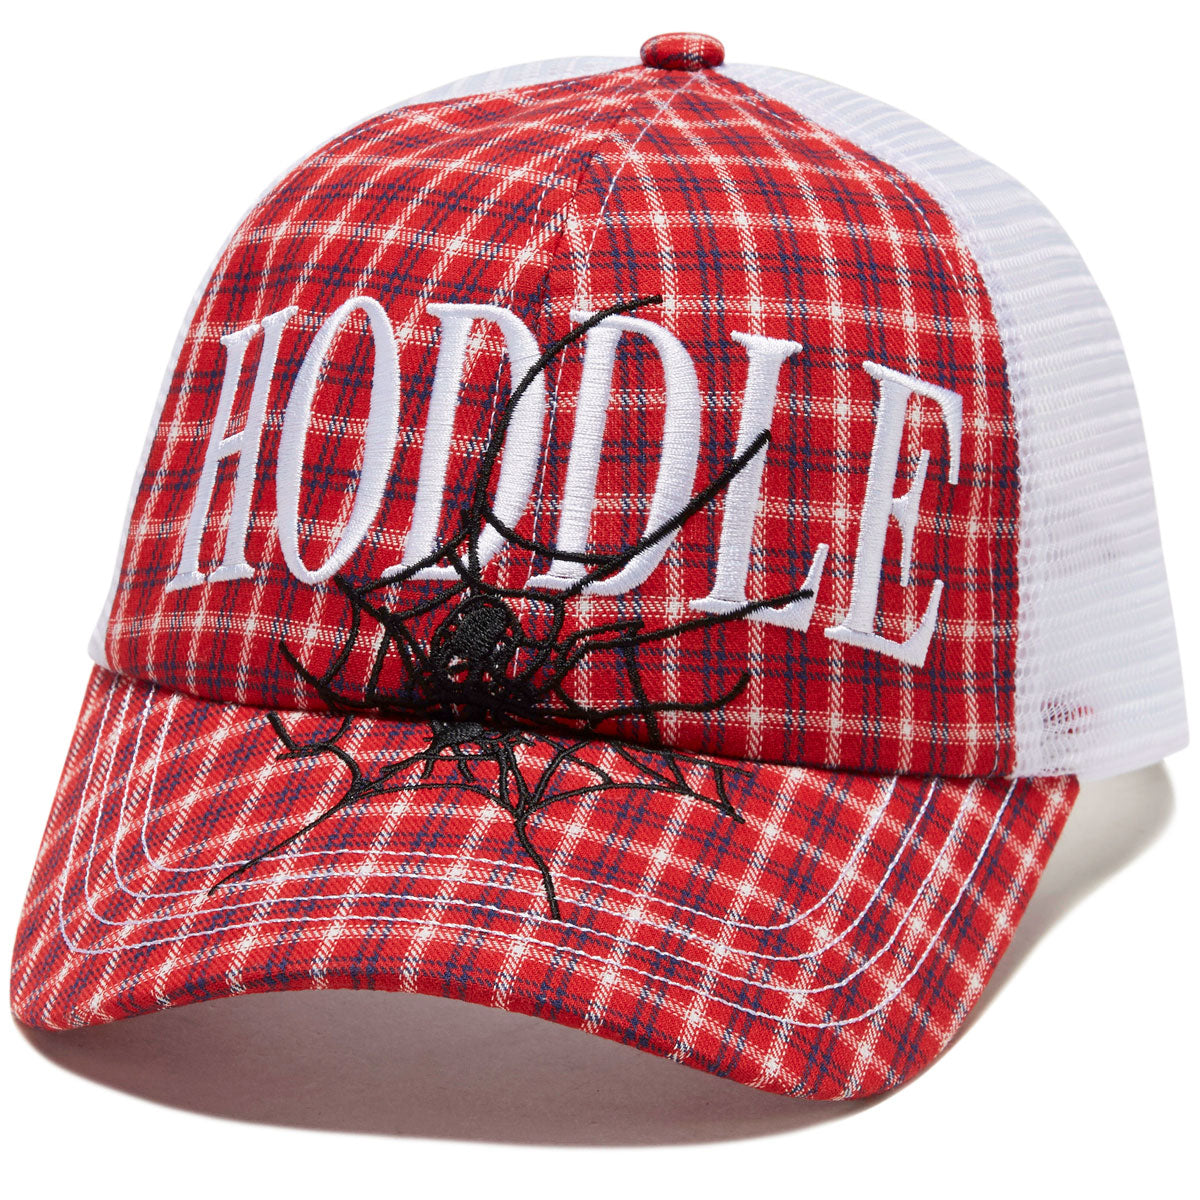 Hoddle Web Trucker Hat - Red image 1